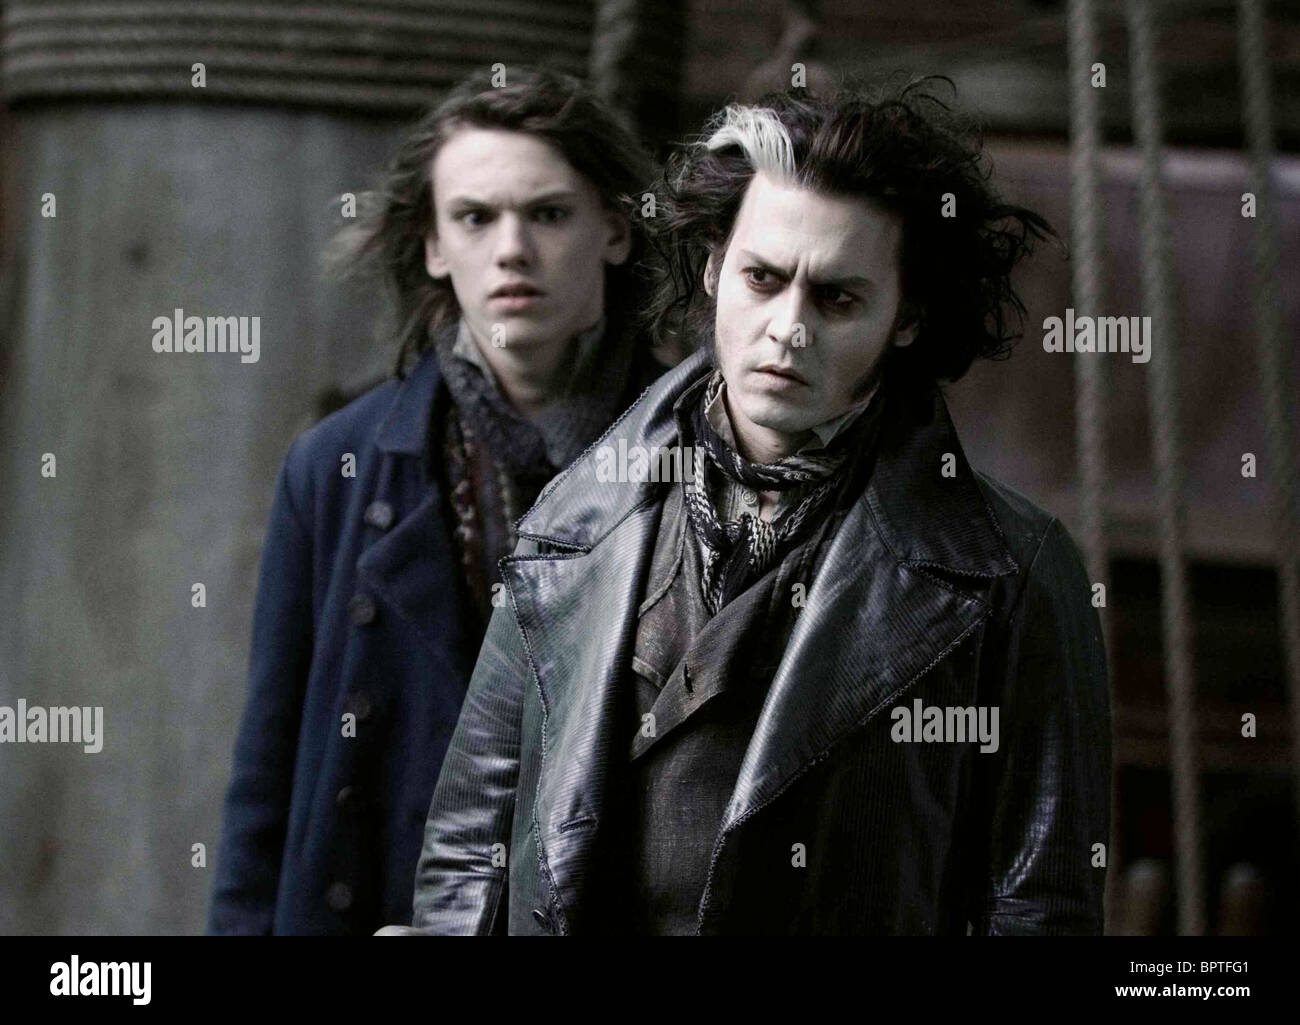 JAMIE CAMPBELL BOWER, Johnny Depp SWEENEY TODD: DER DÄMON BARBIER der Fleet  Street, 2007 Stockfotografie - Alamy